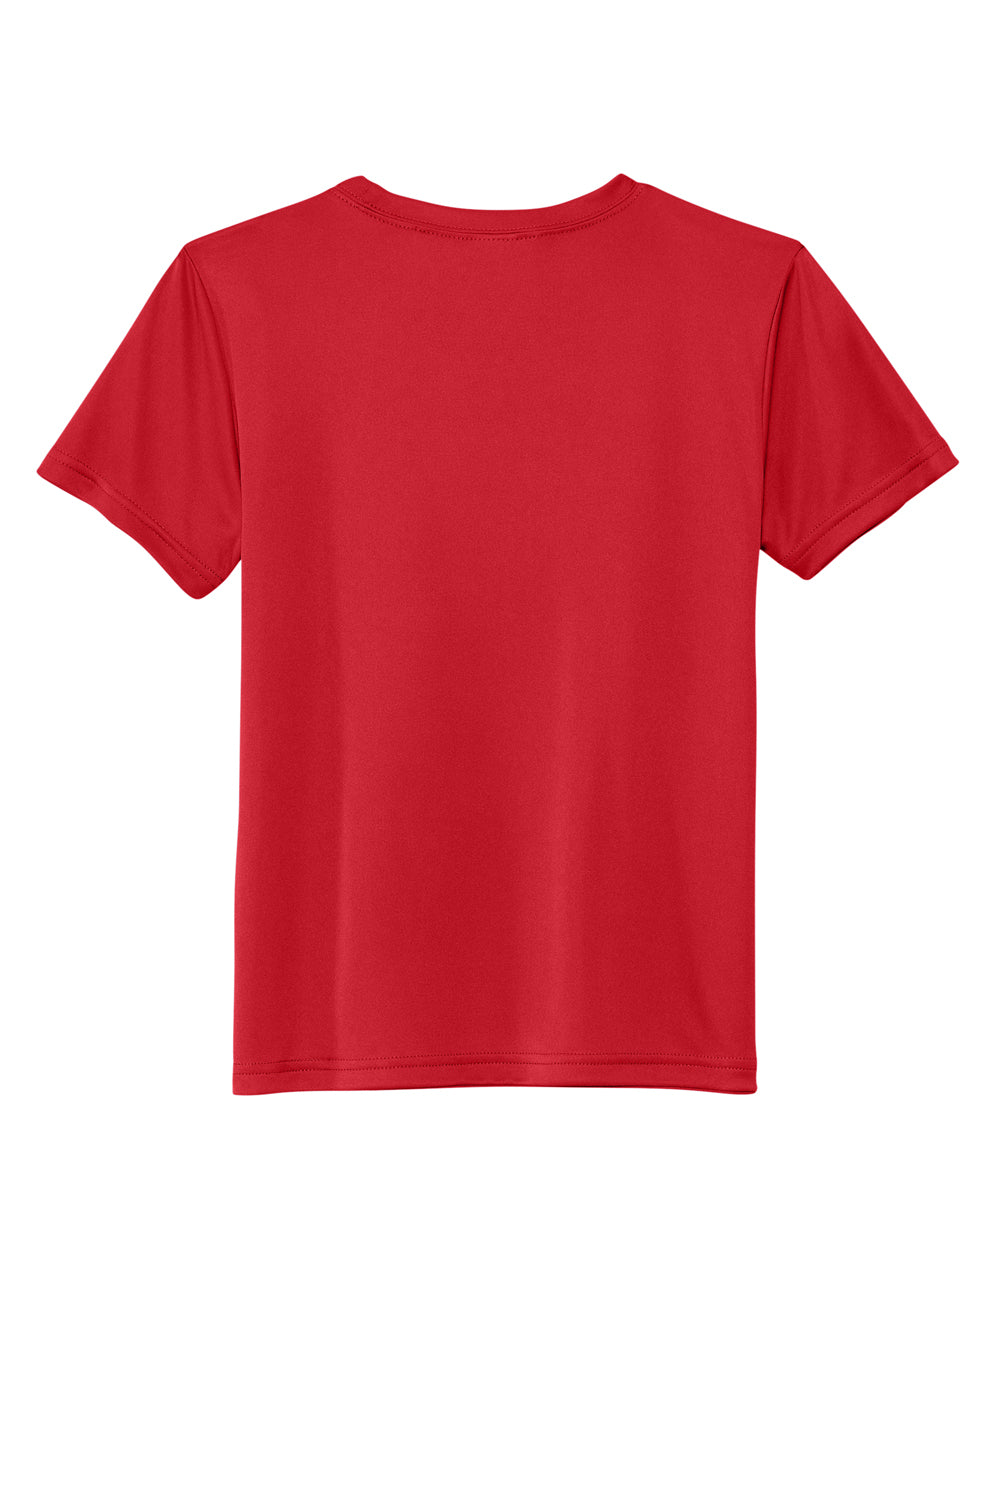 Sport-Tek YST720 Re-Compete PosiCharge Short Sleeve Crewneck T-Shirt True Red Flat Back